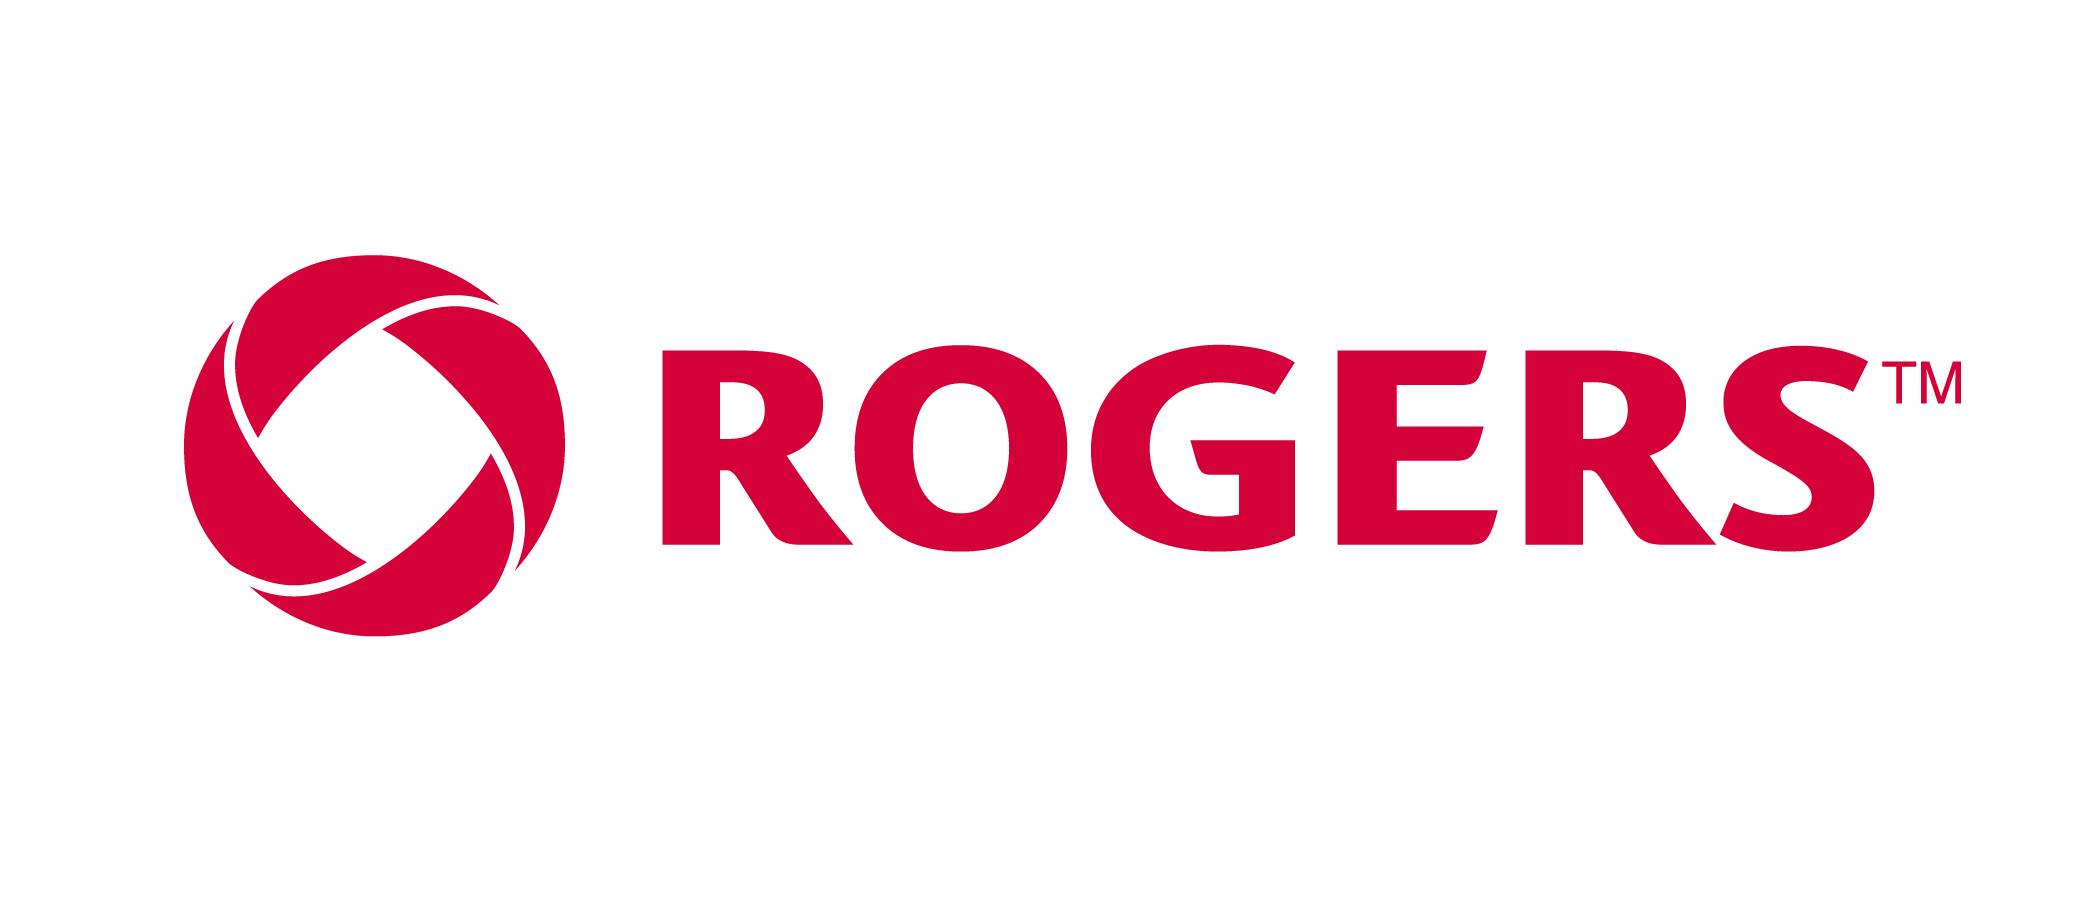 rogers-logos